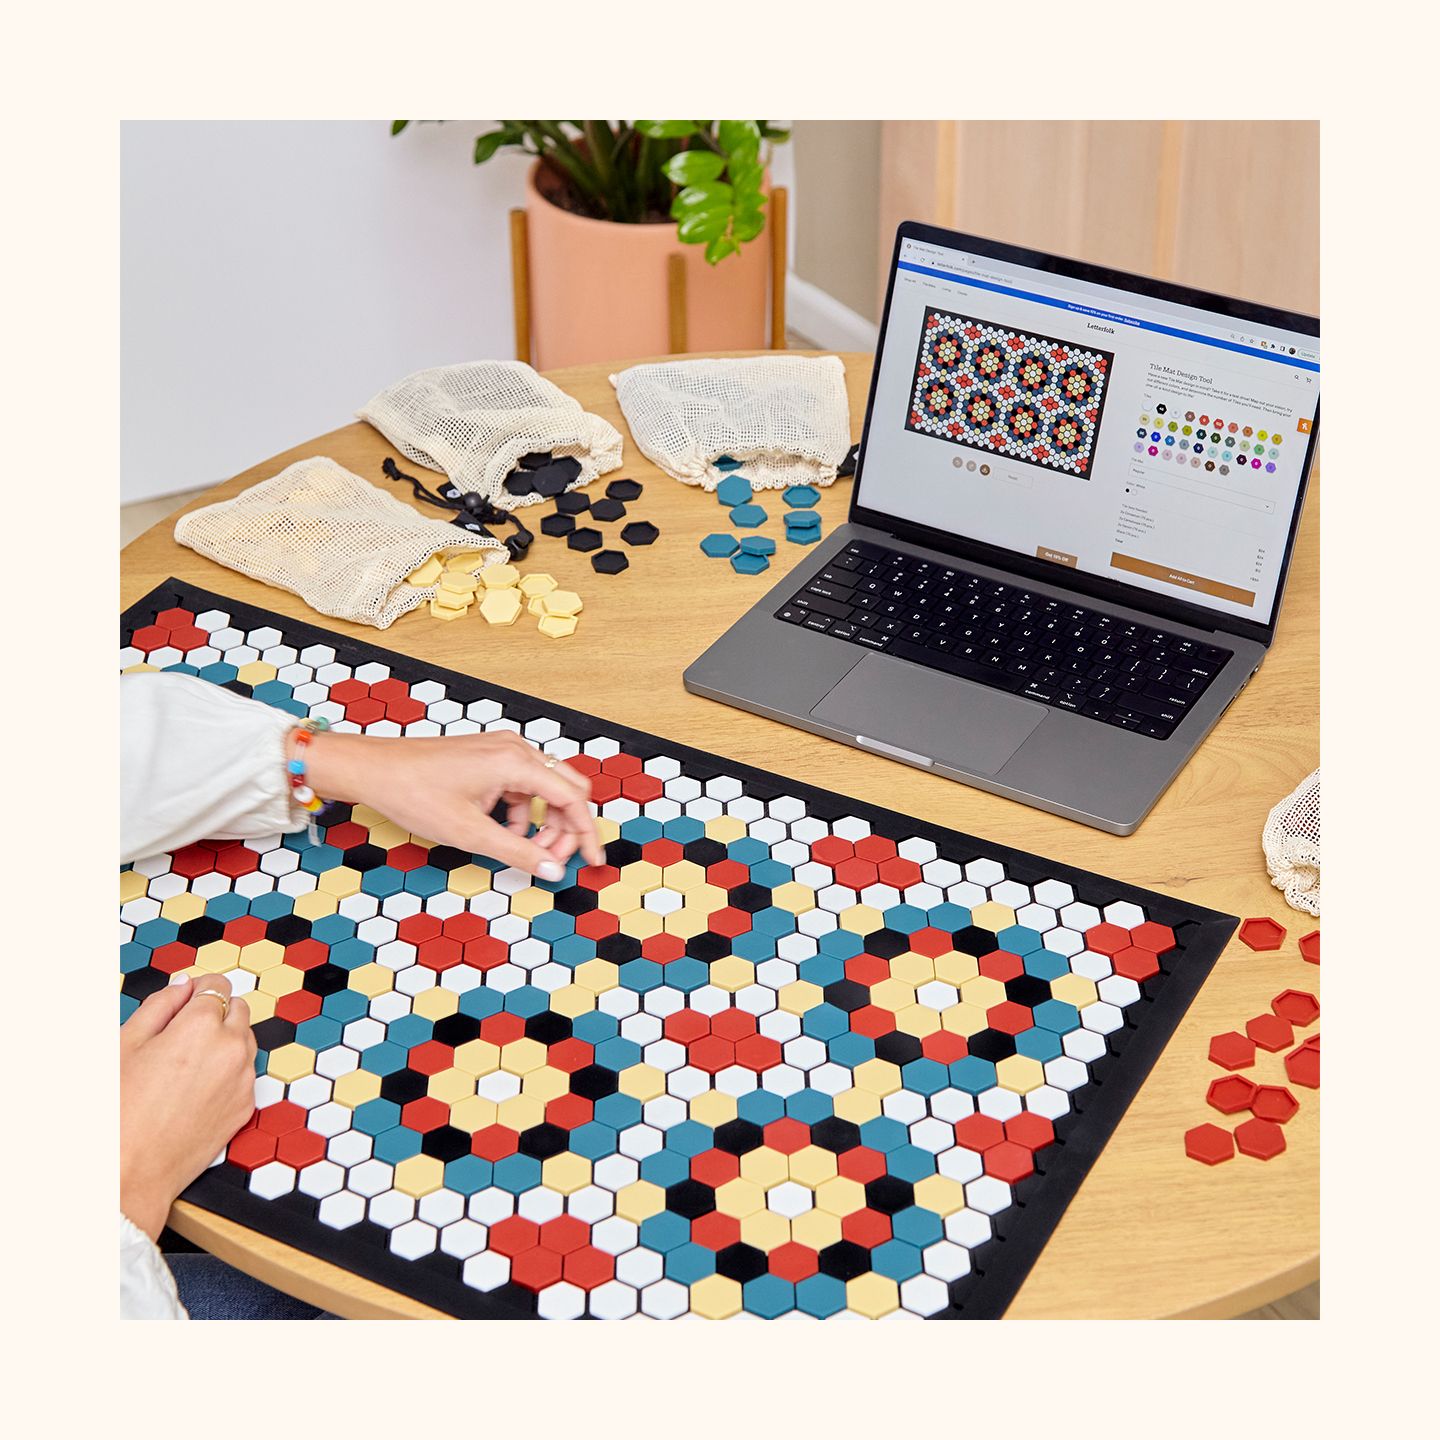 A person designing a Tile Mat with Tile Sets